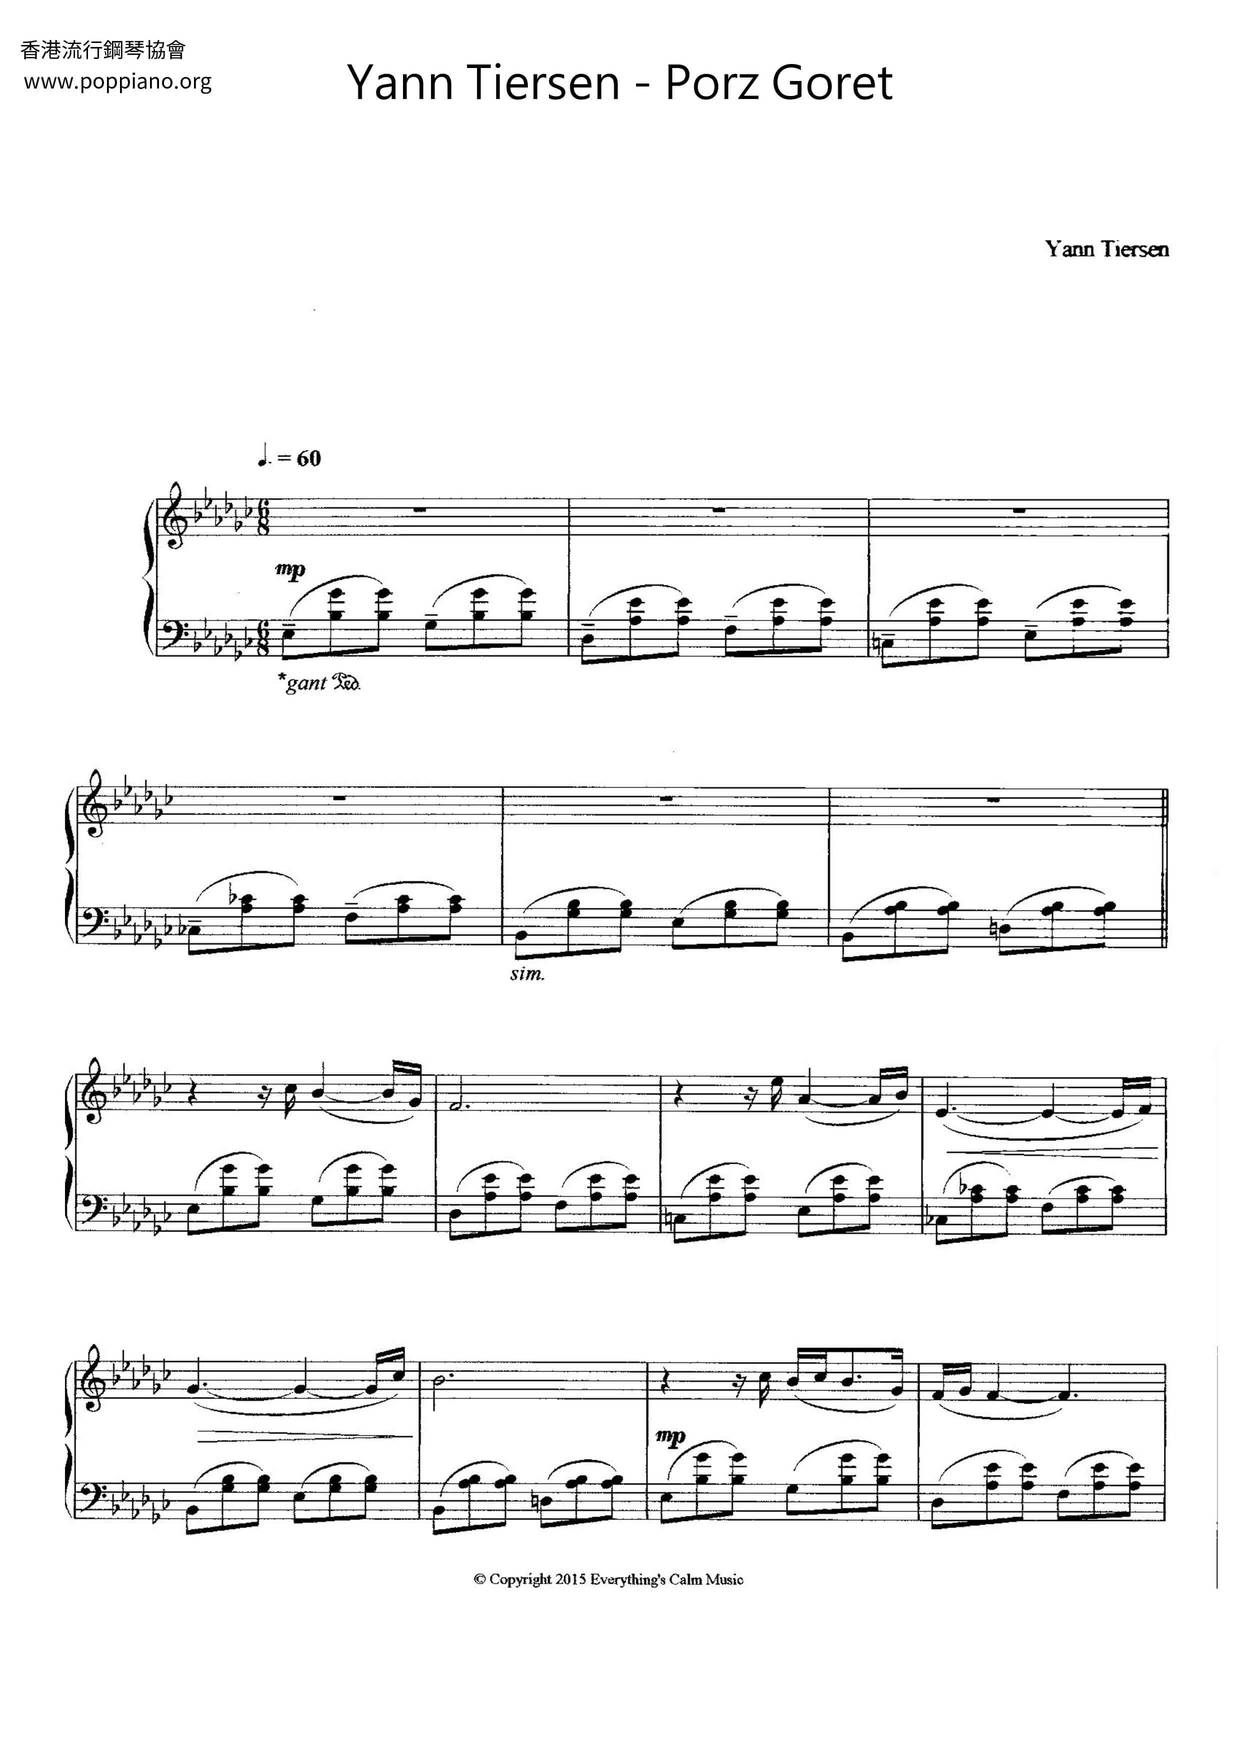 Yann Tiersen Porz Goret Sheet Music Pdf Free Score Download By yann tiersen for the instruments piano, vocal and category new. yann tiersen porz goret sheet music pdf